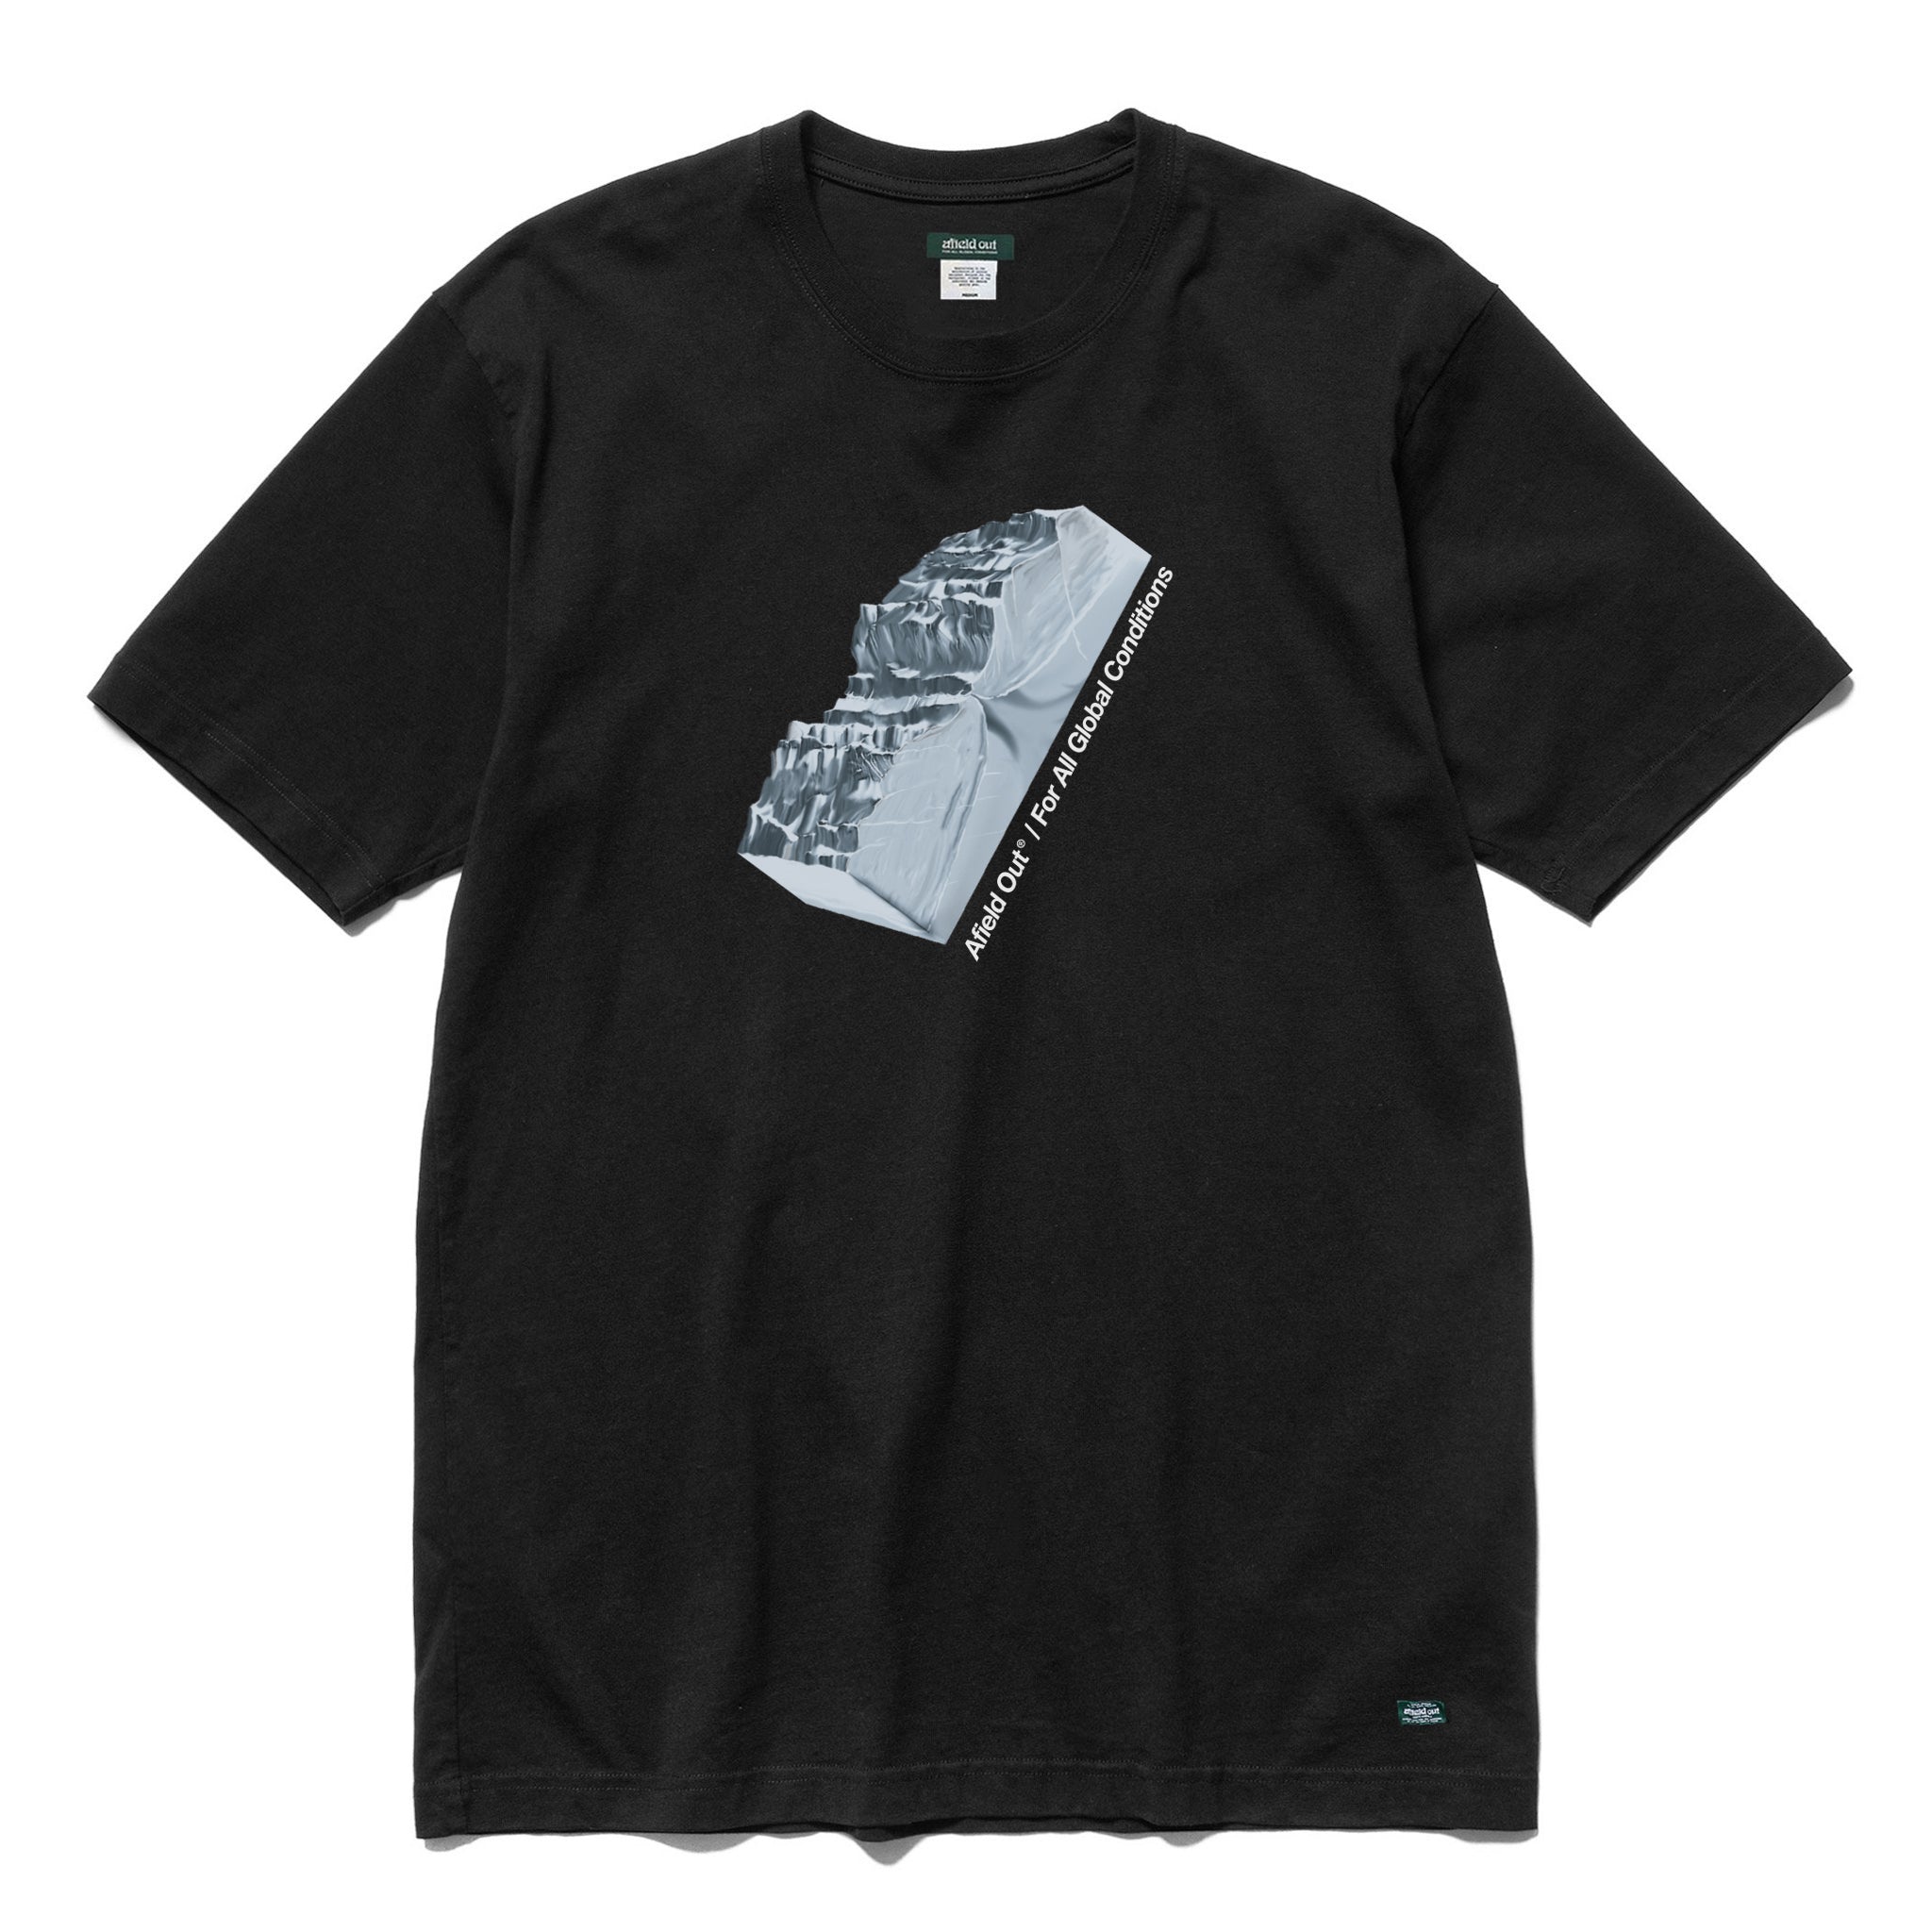 Tectonic T-Shirt